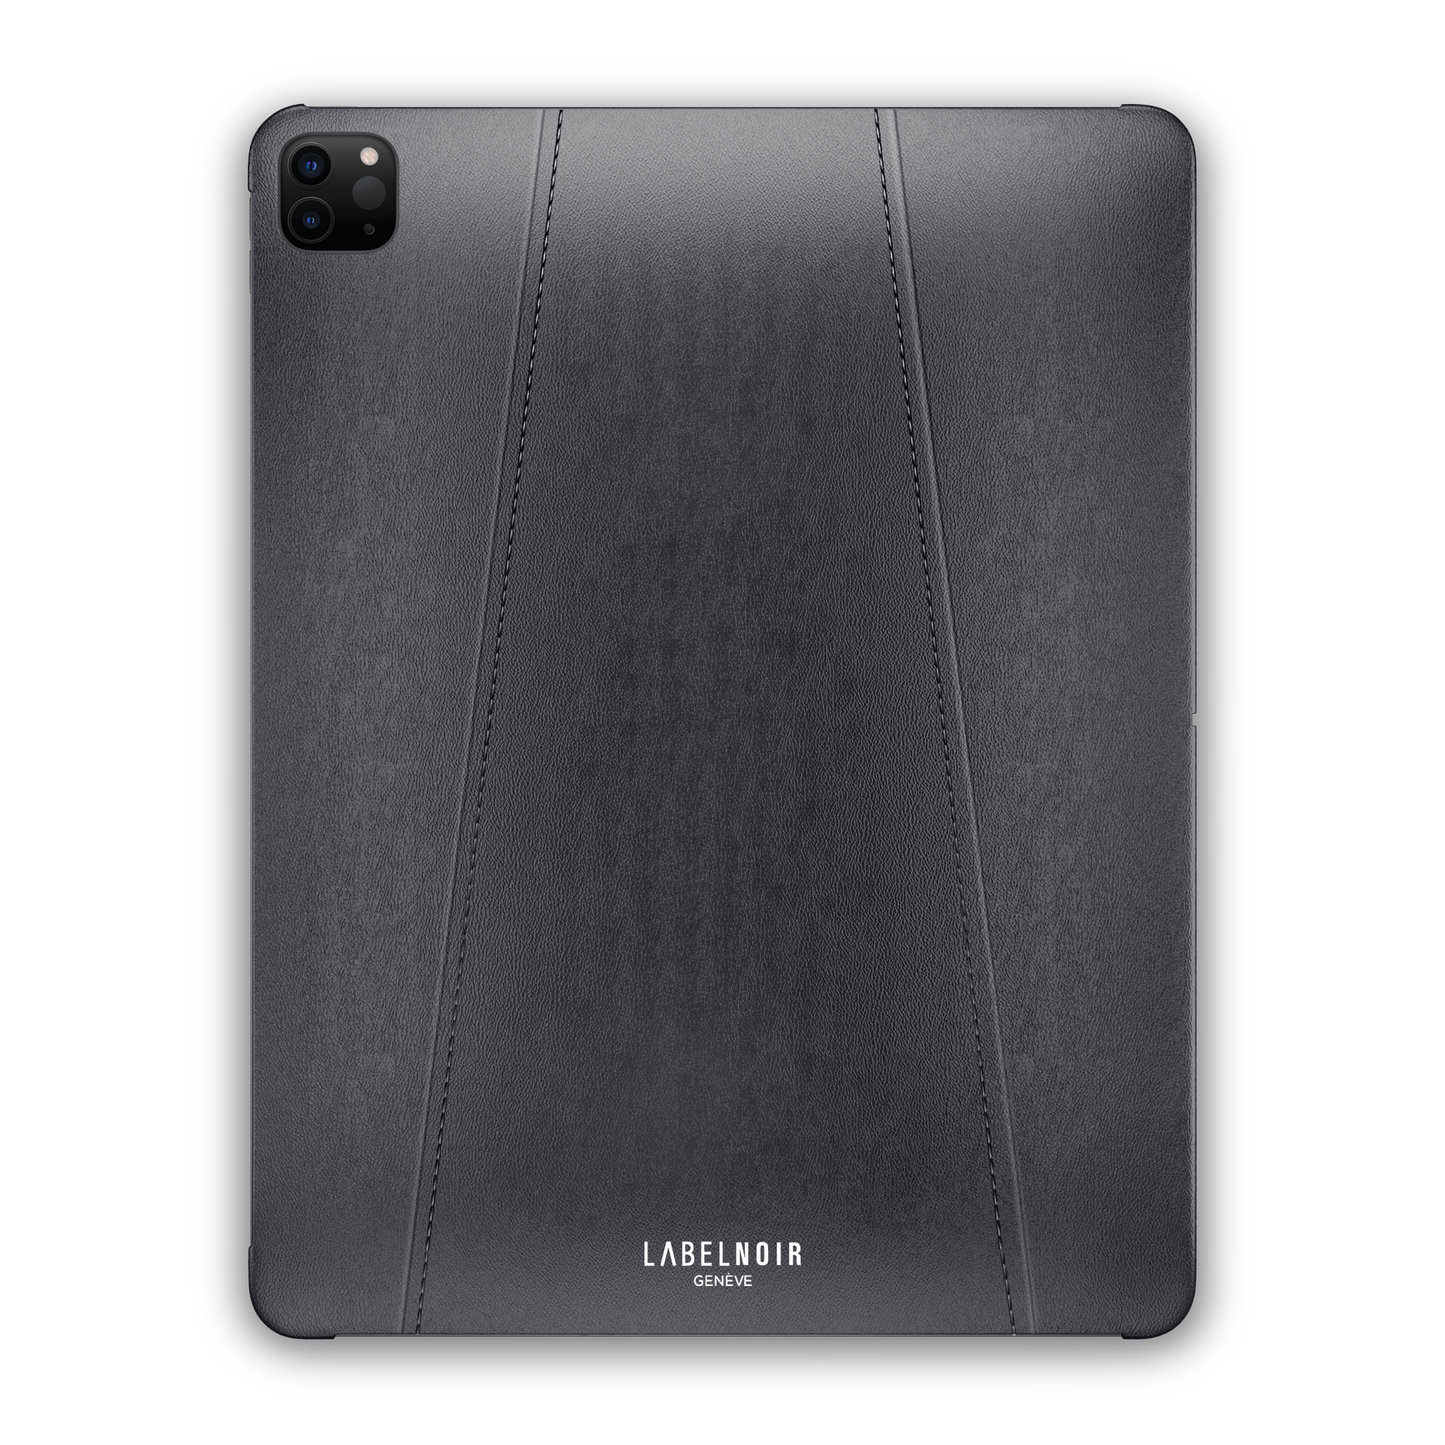 Ipad Pro (6th Gen) 12.9-inch  Black Leather Case